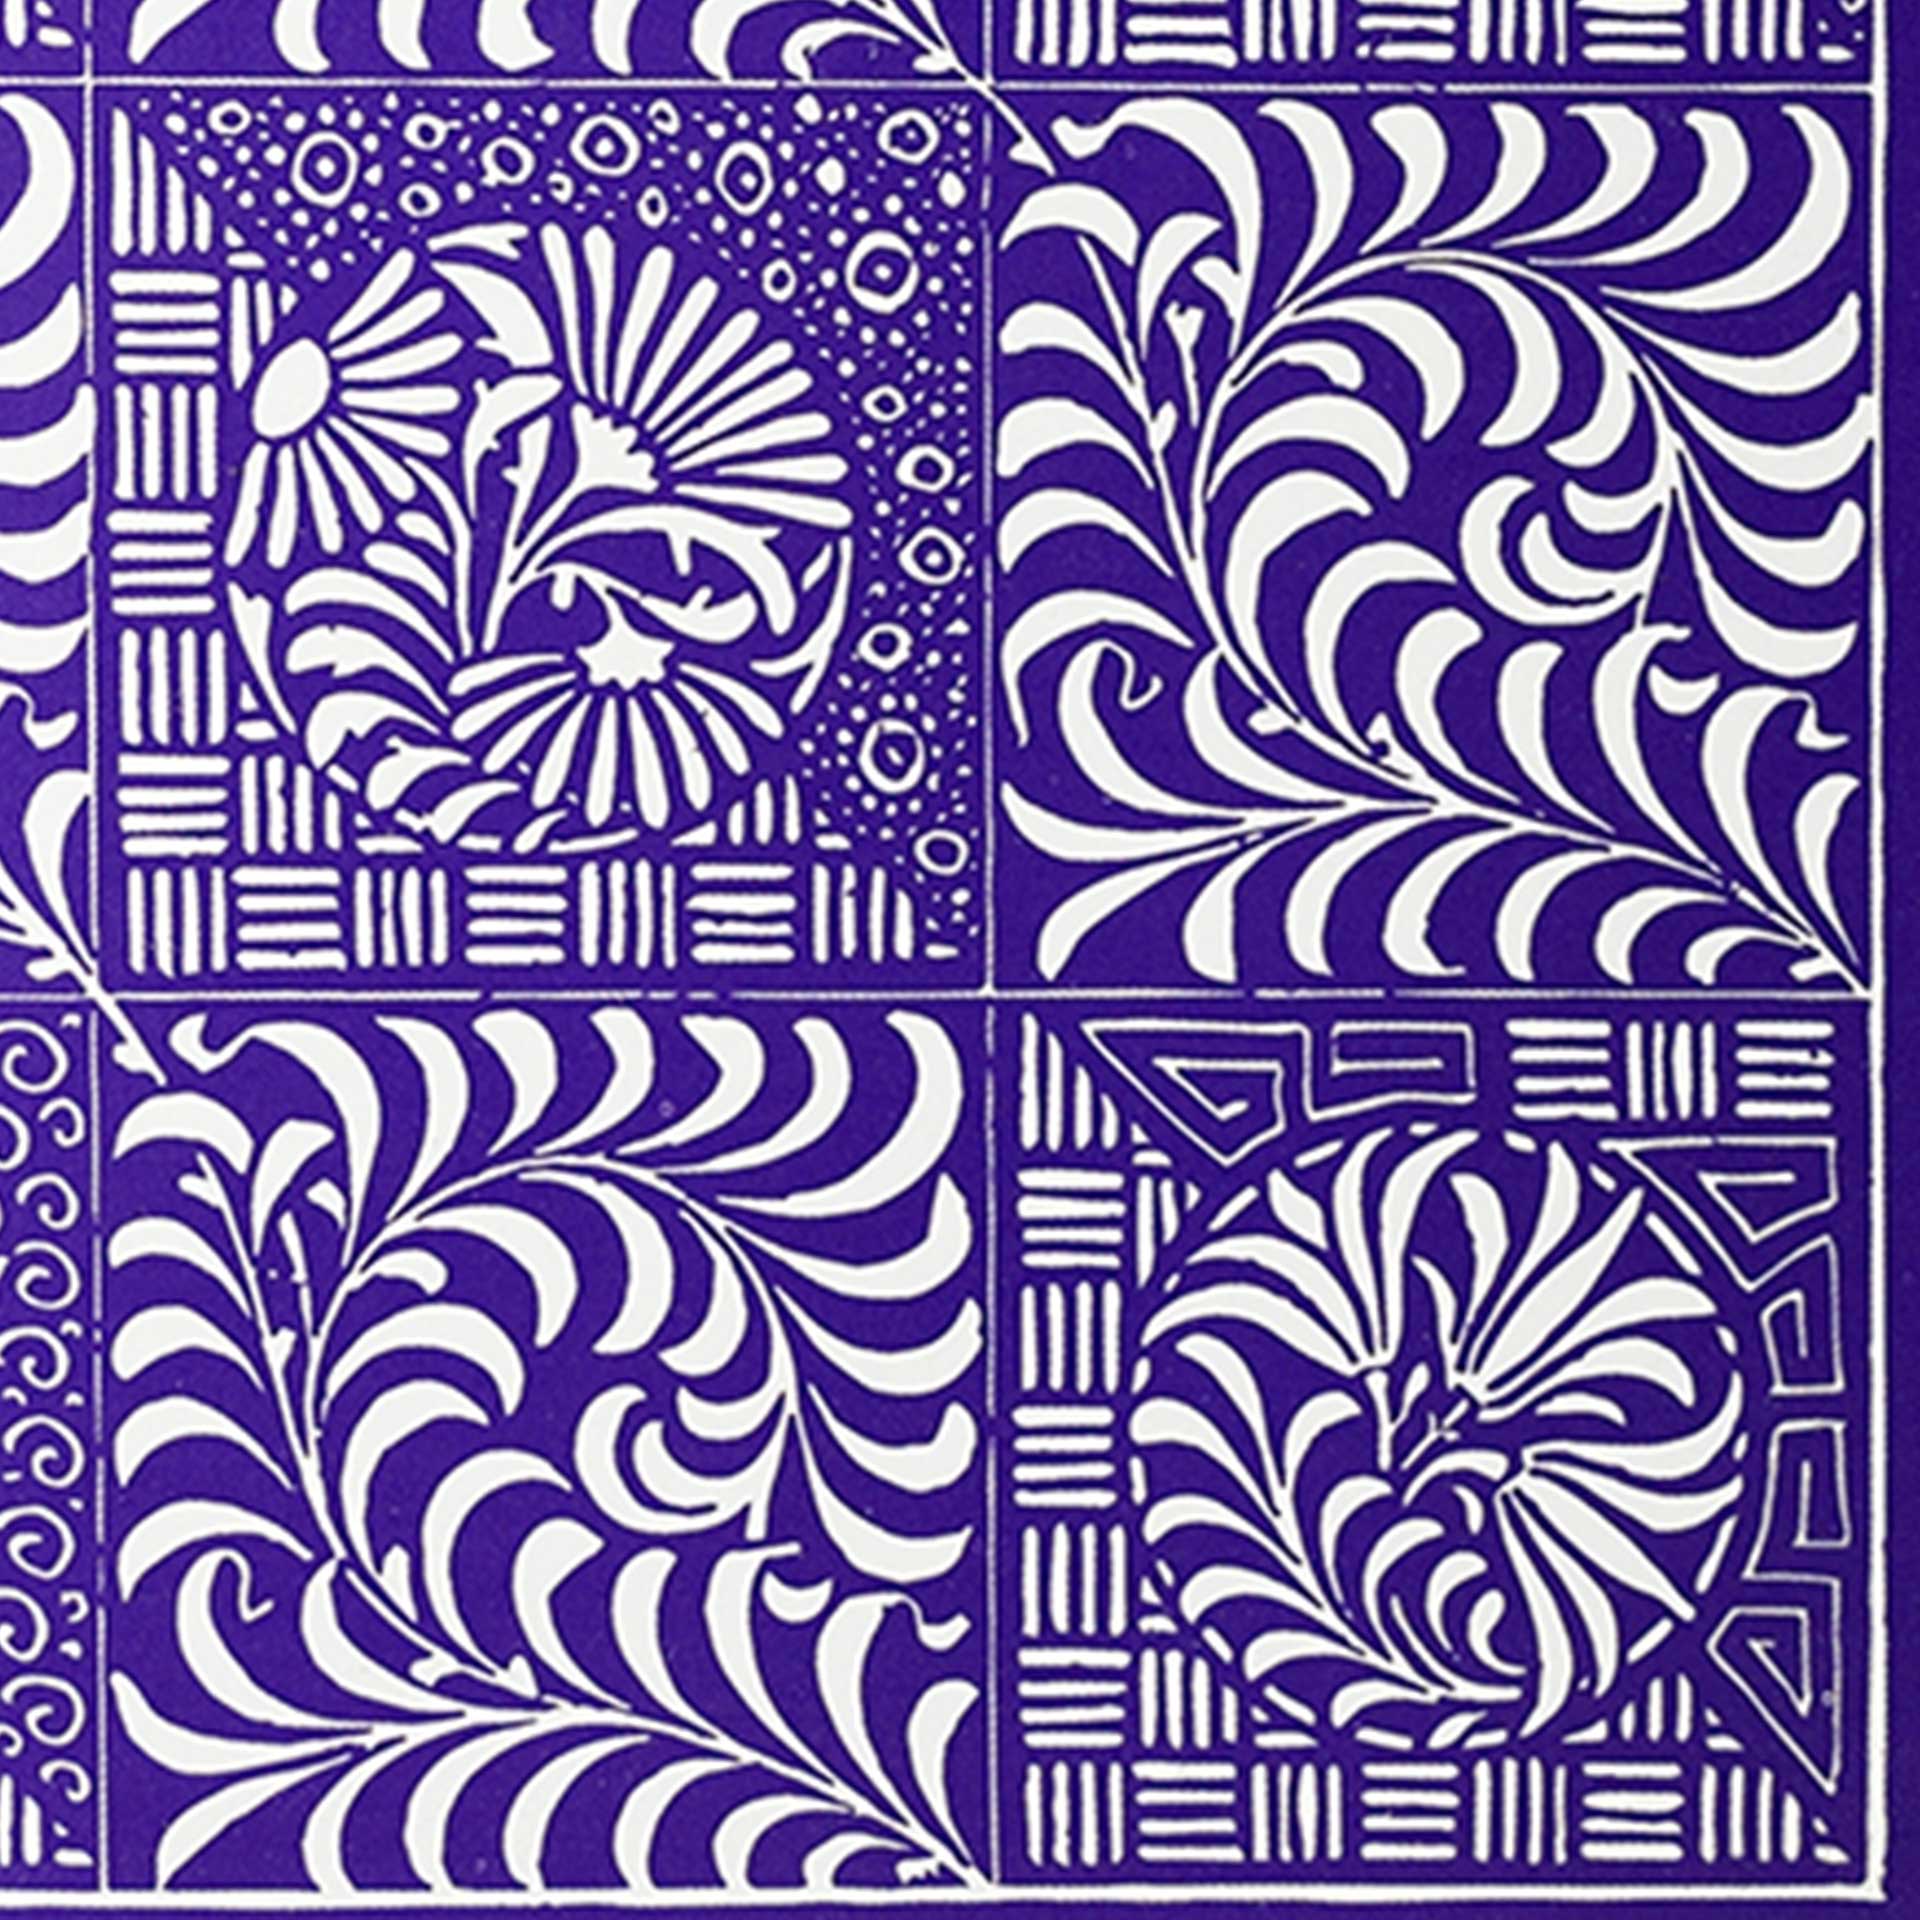 Closeup of geometric vines in purple